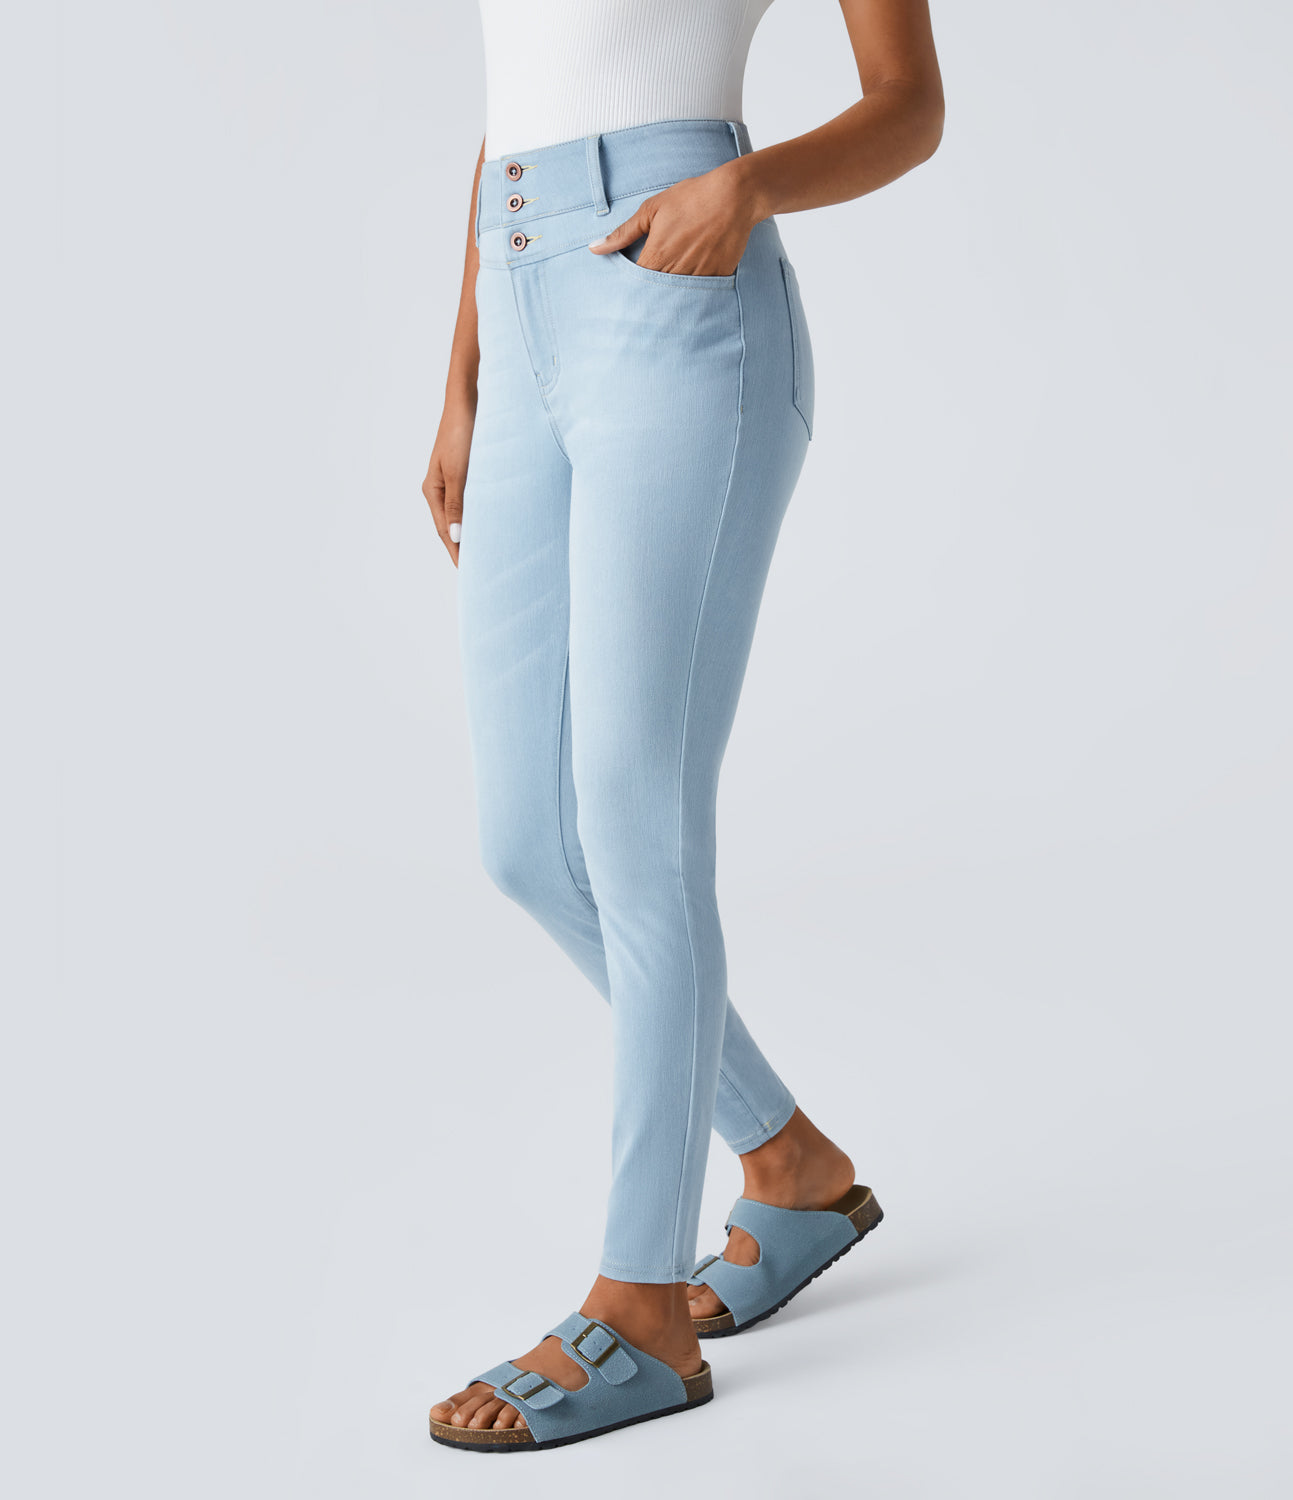 

Halara HalaraMagicв„ў High Waisted Button Zipper Multiple Pockets Stretchy Knit Casual Skinny Jeans - Washed Denim Sunny Blue